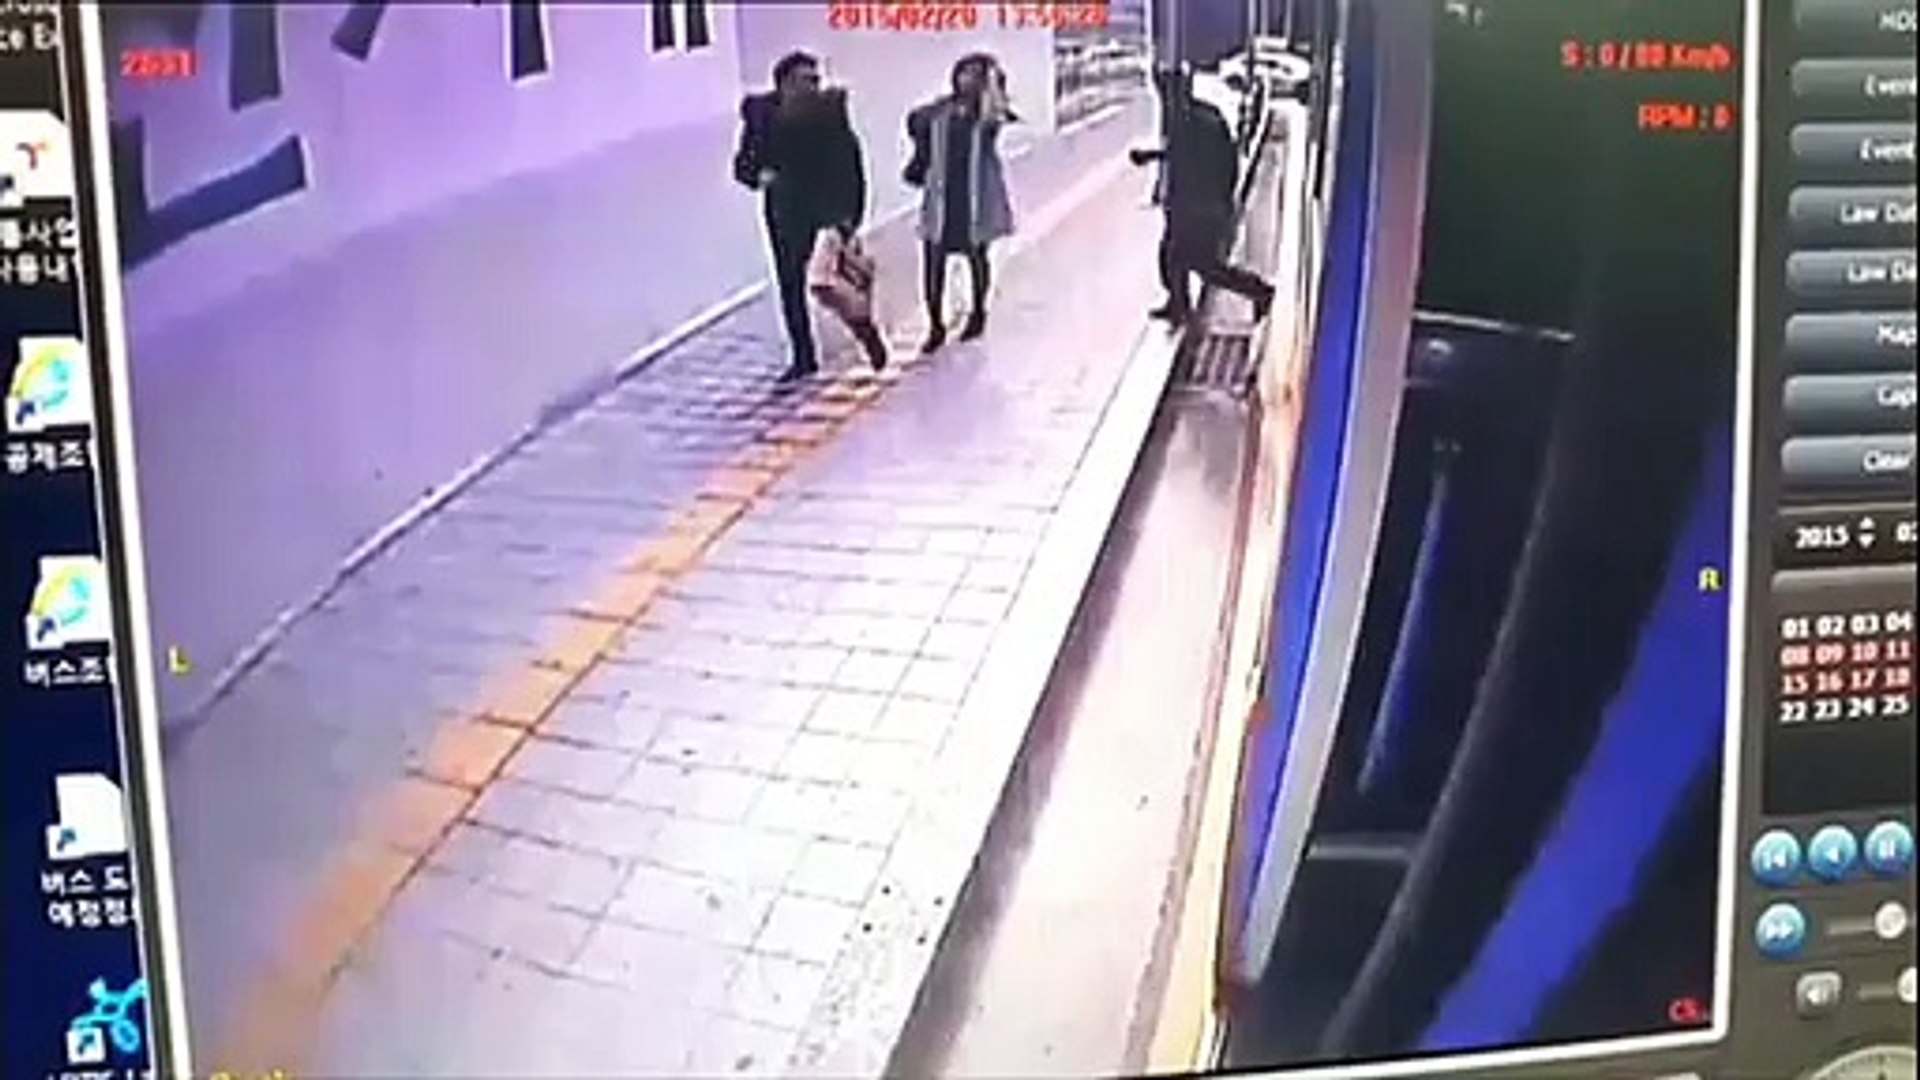 Video_ Sinkhole in South Korea 'swallows' 2 pedestrians - BBC News-copypasteads.com